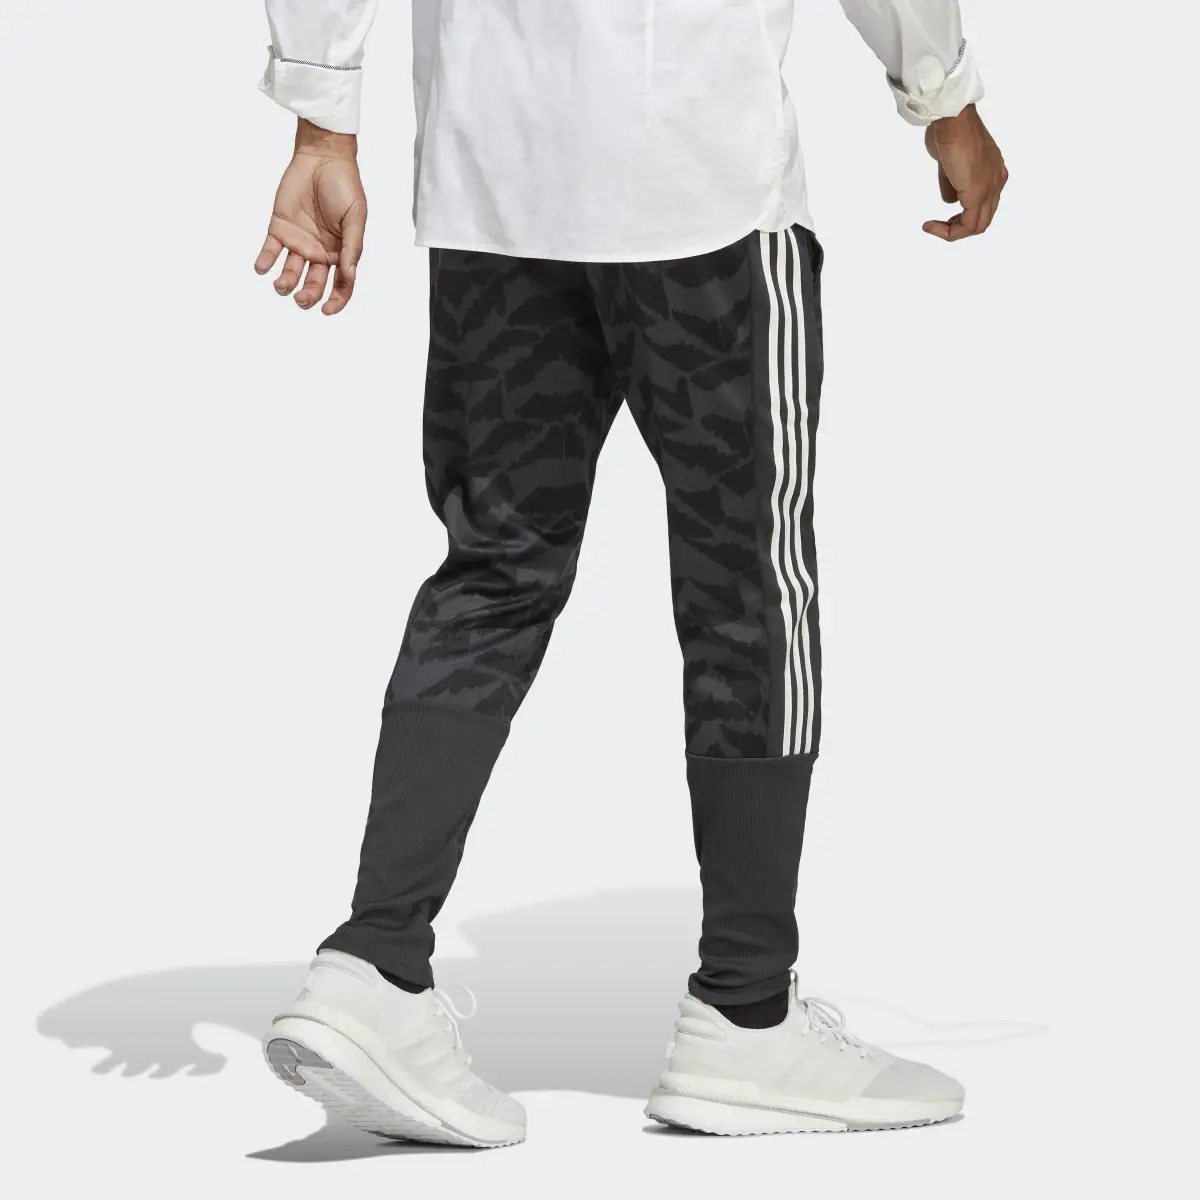 Adidas Pants Deportivos Tiro Suit-Up Lifestyle. 2